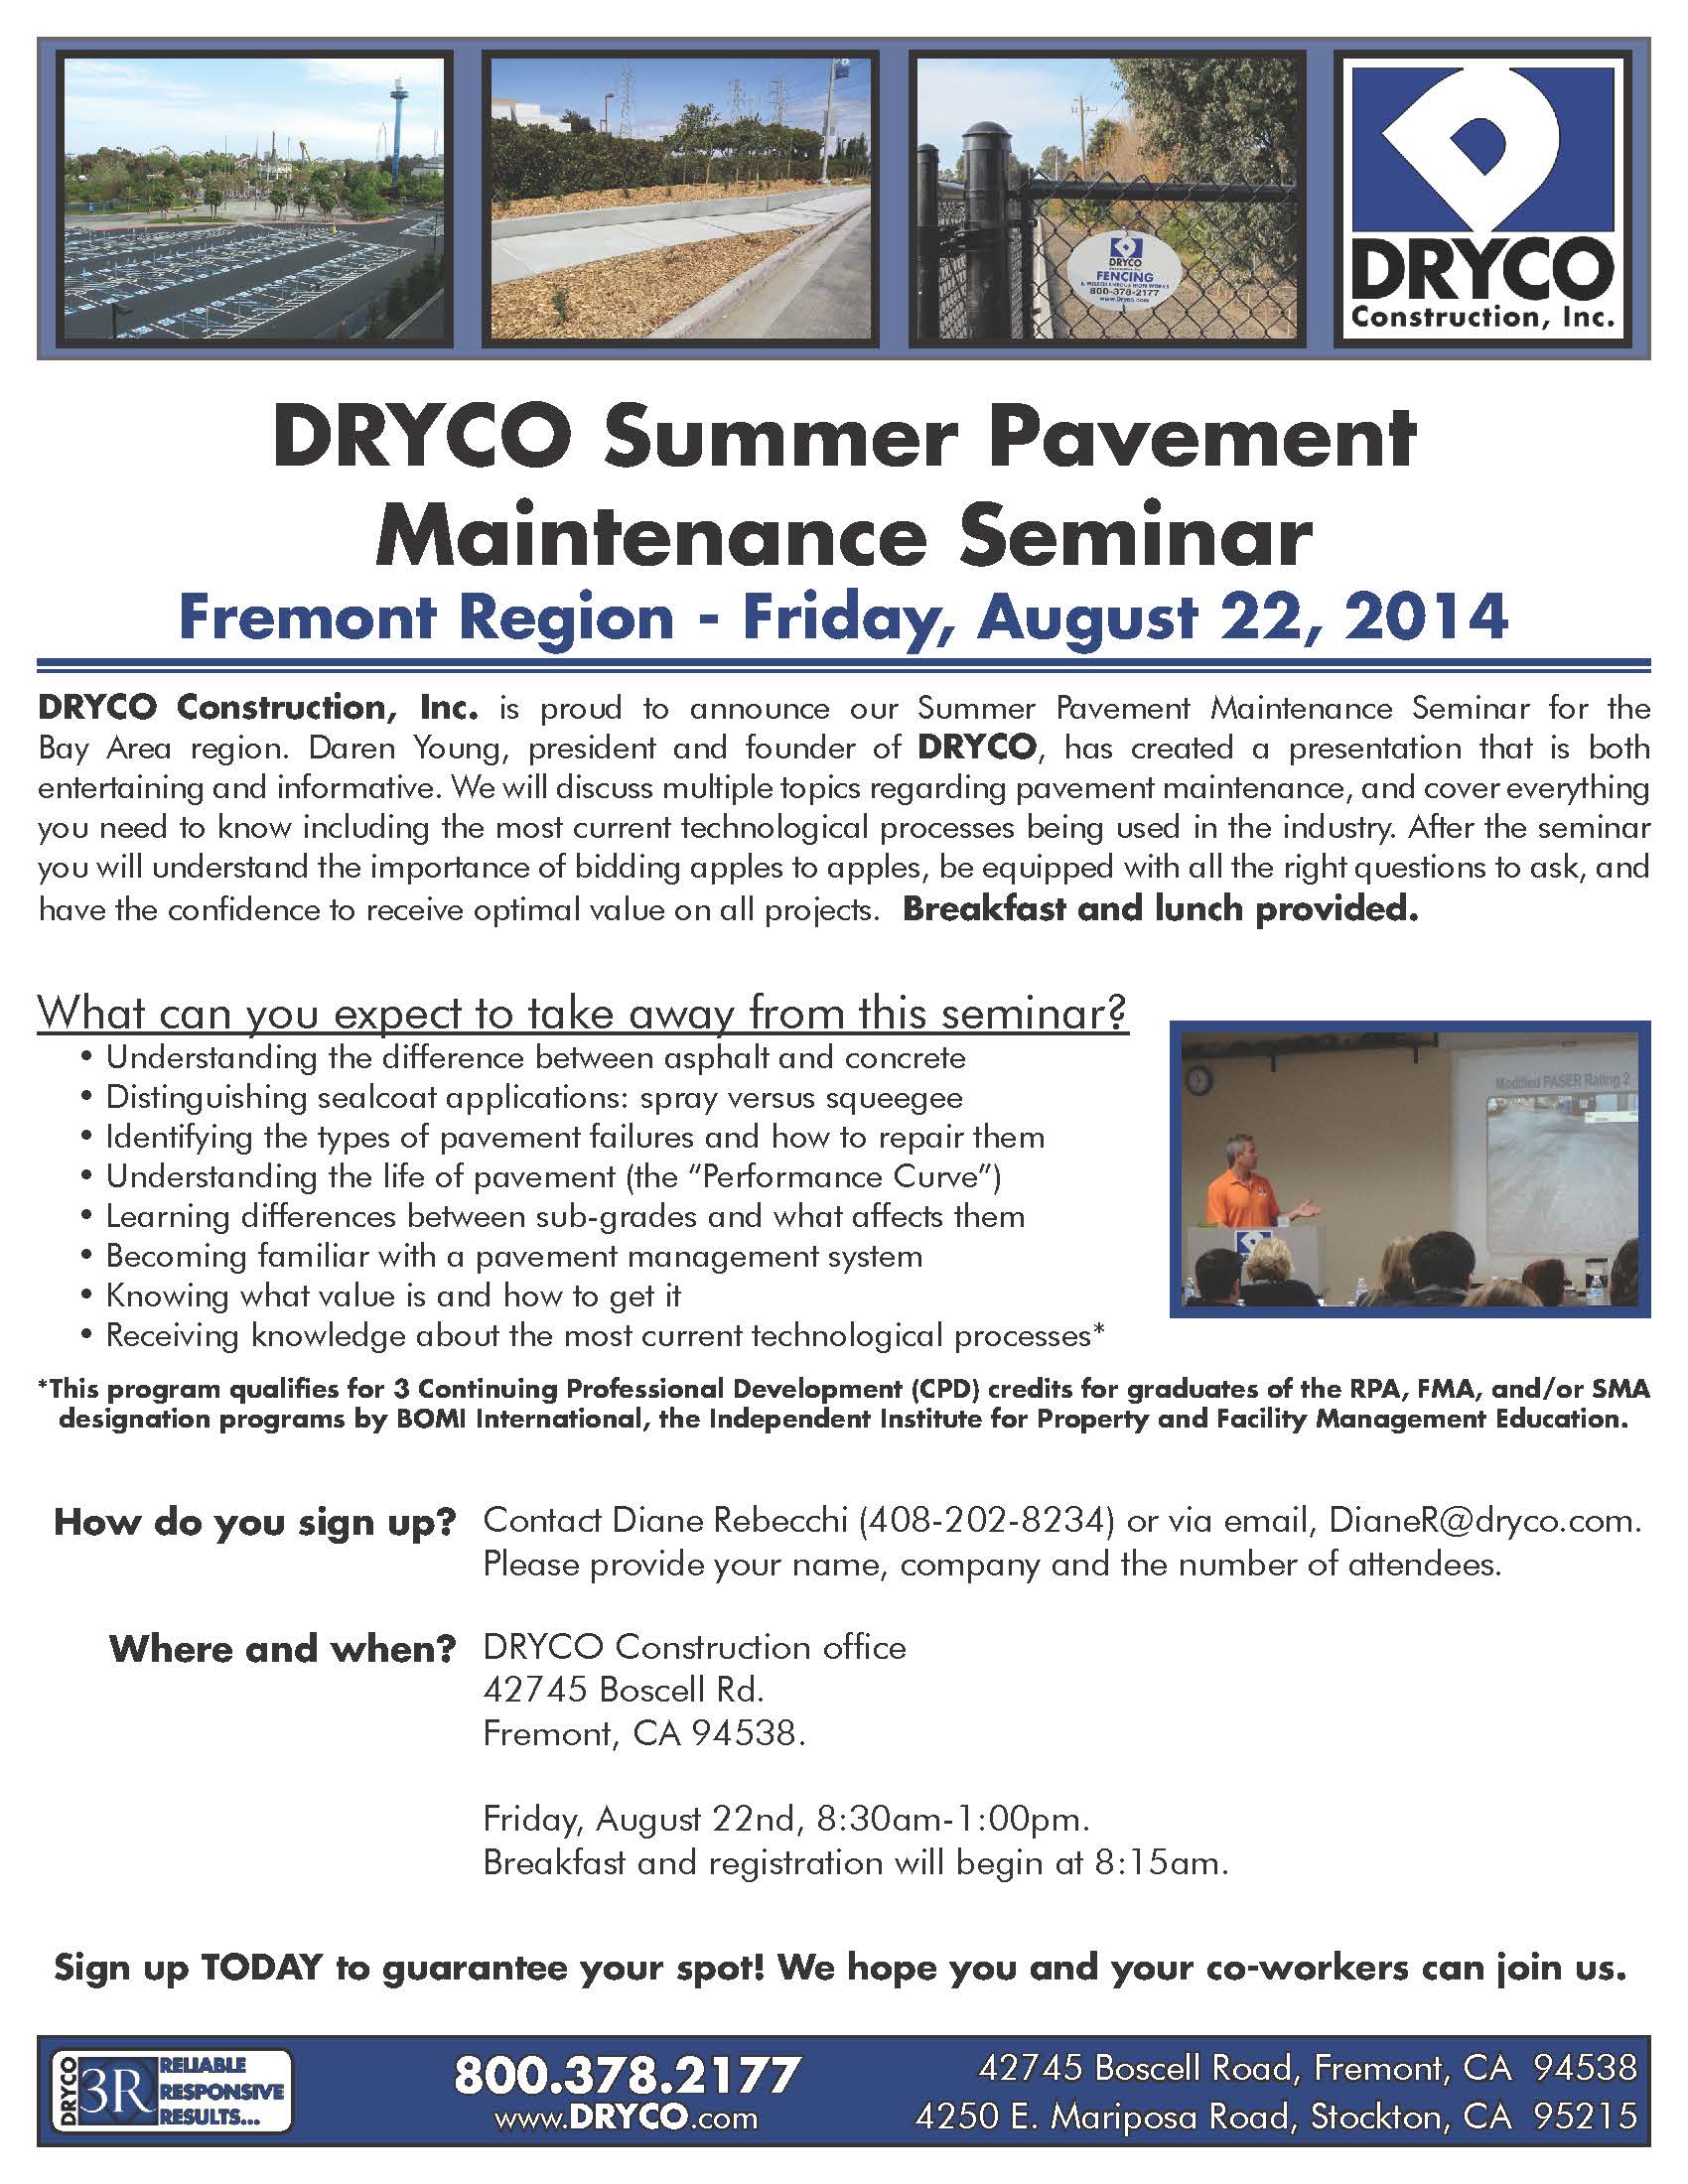 DRYCO Fremont Summer 2014 Paving Seminar